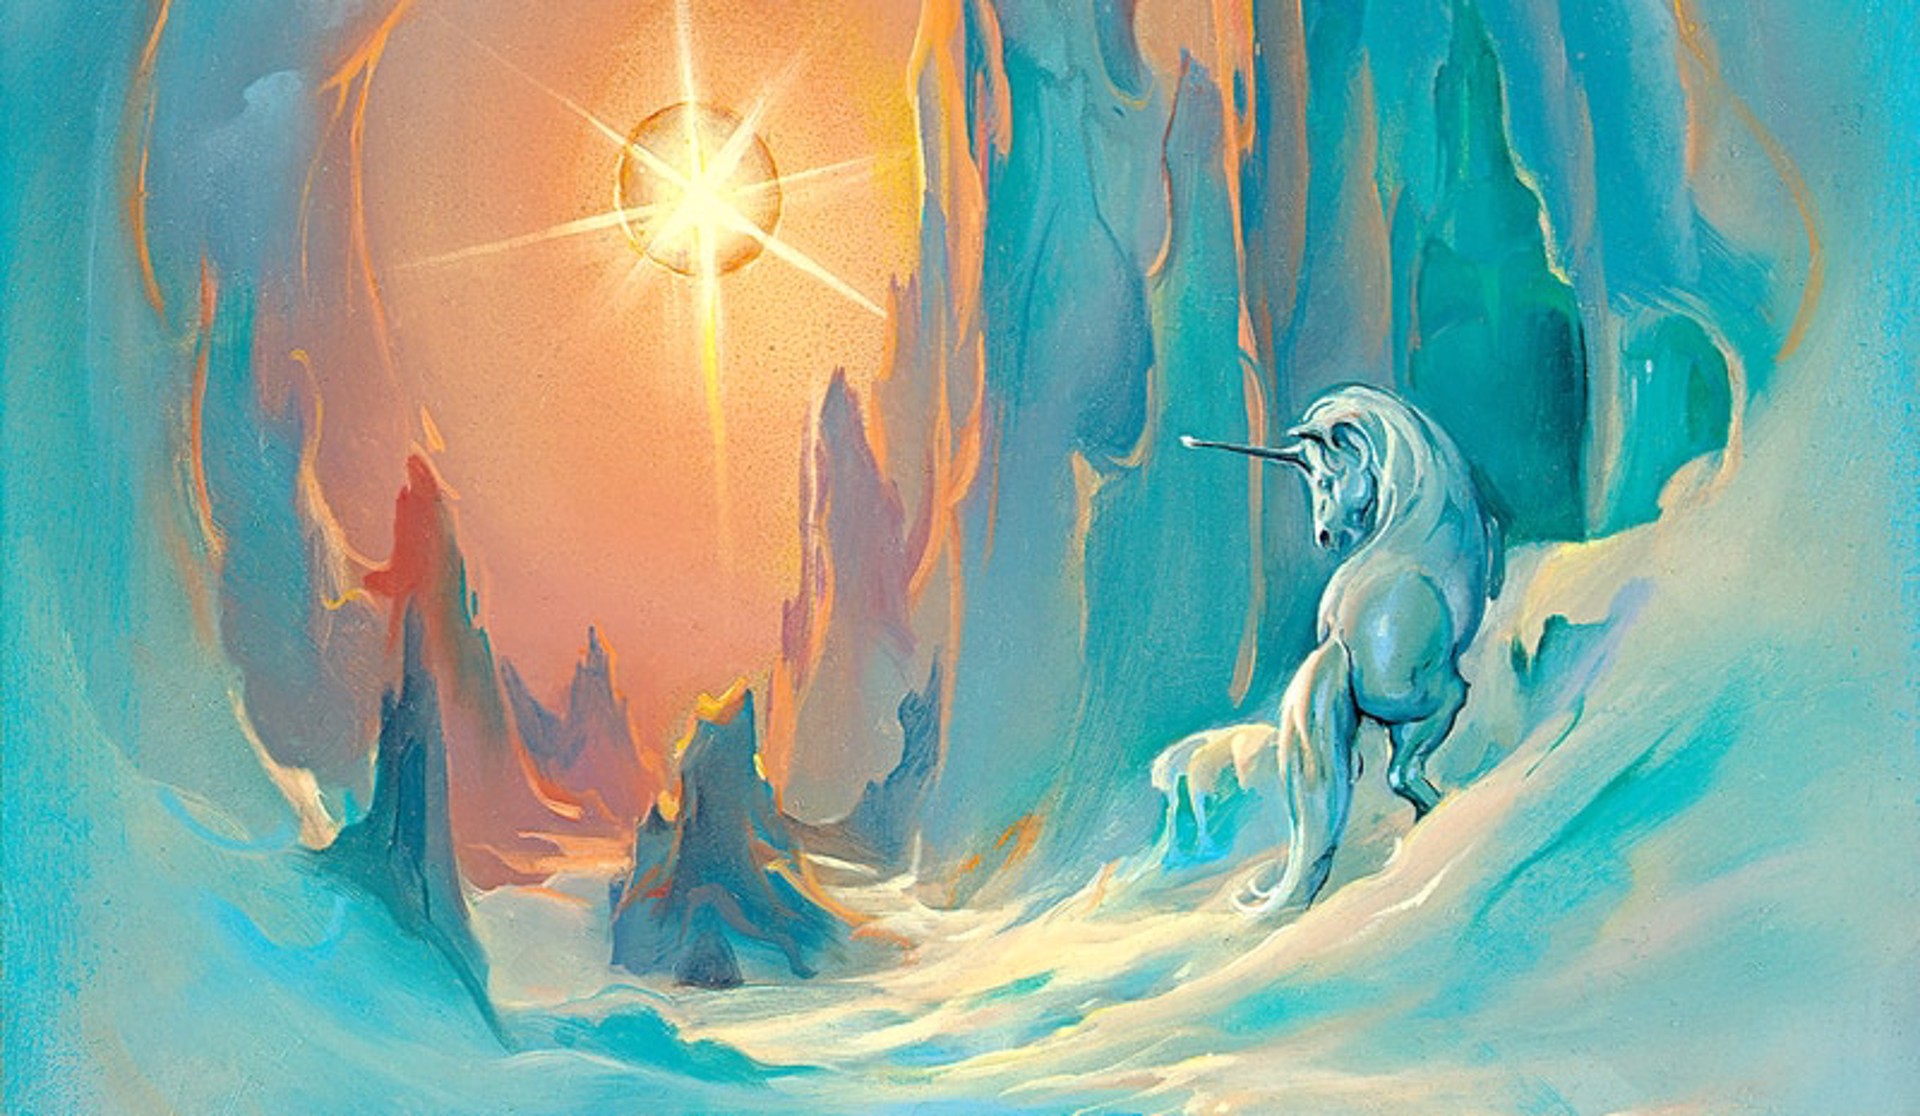 The Last Unicorn by John Pitre